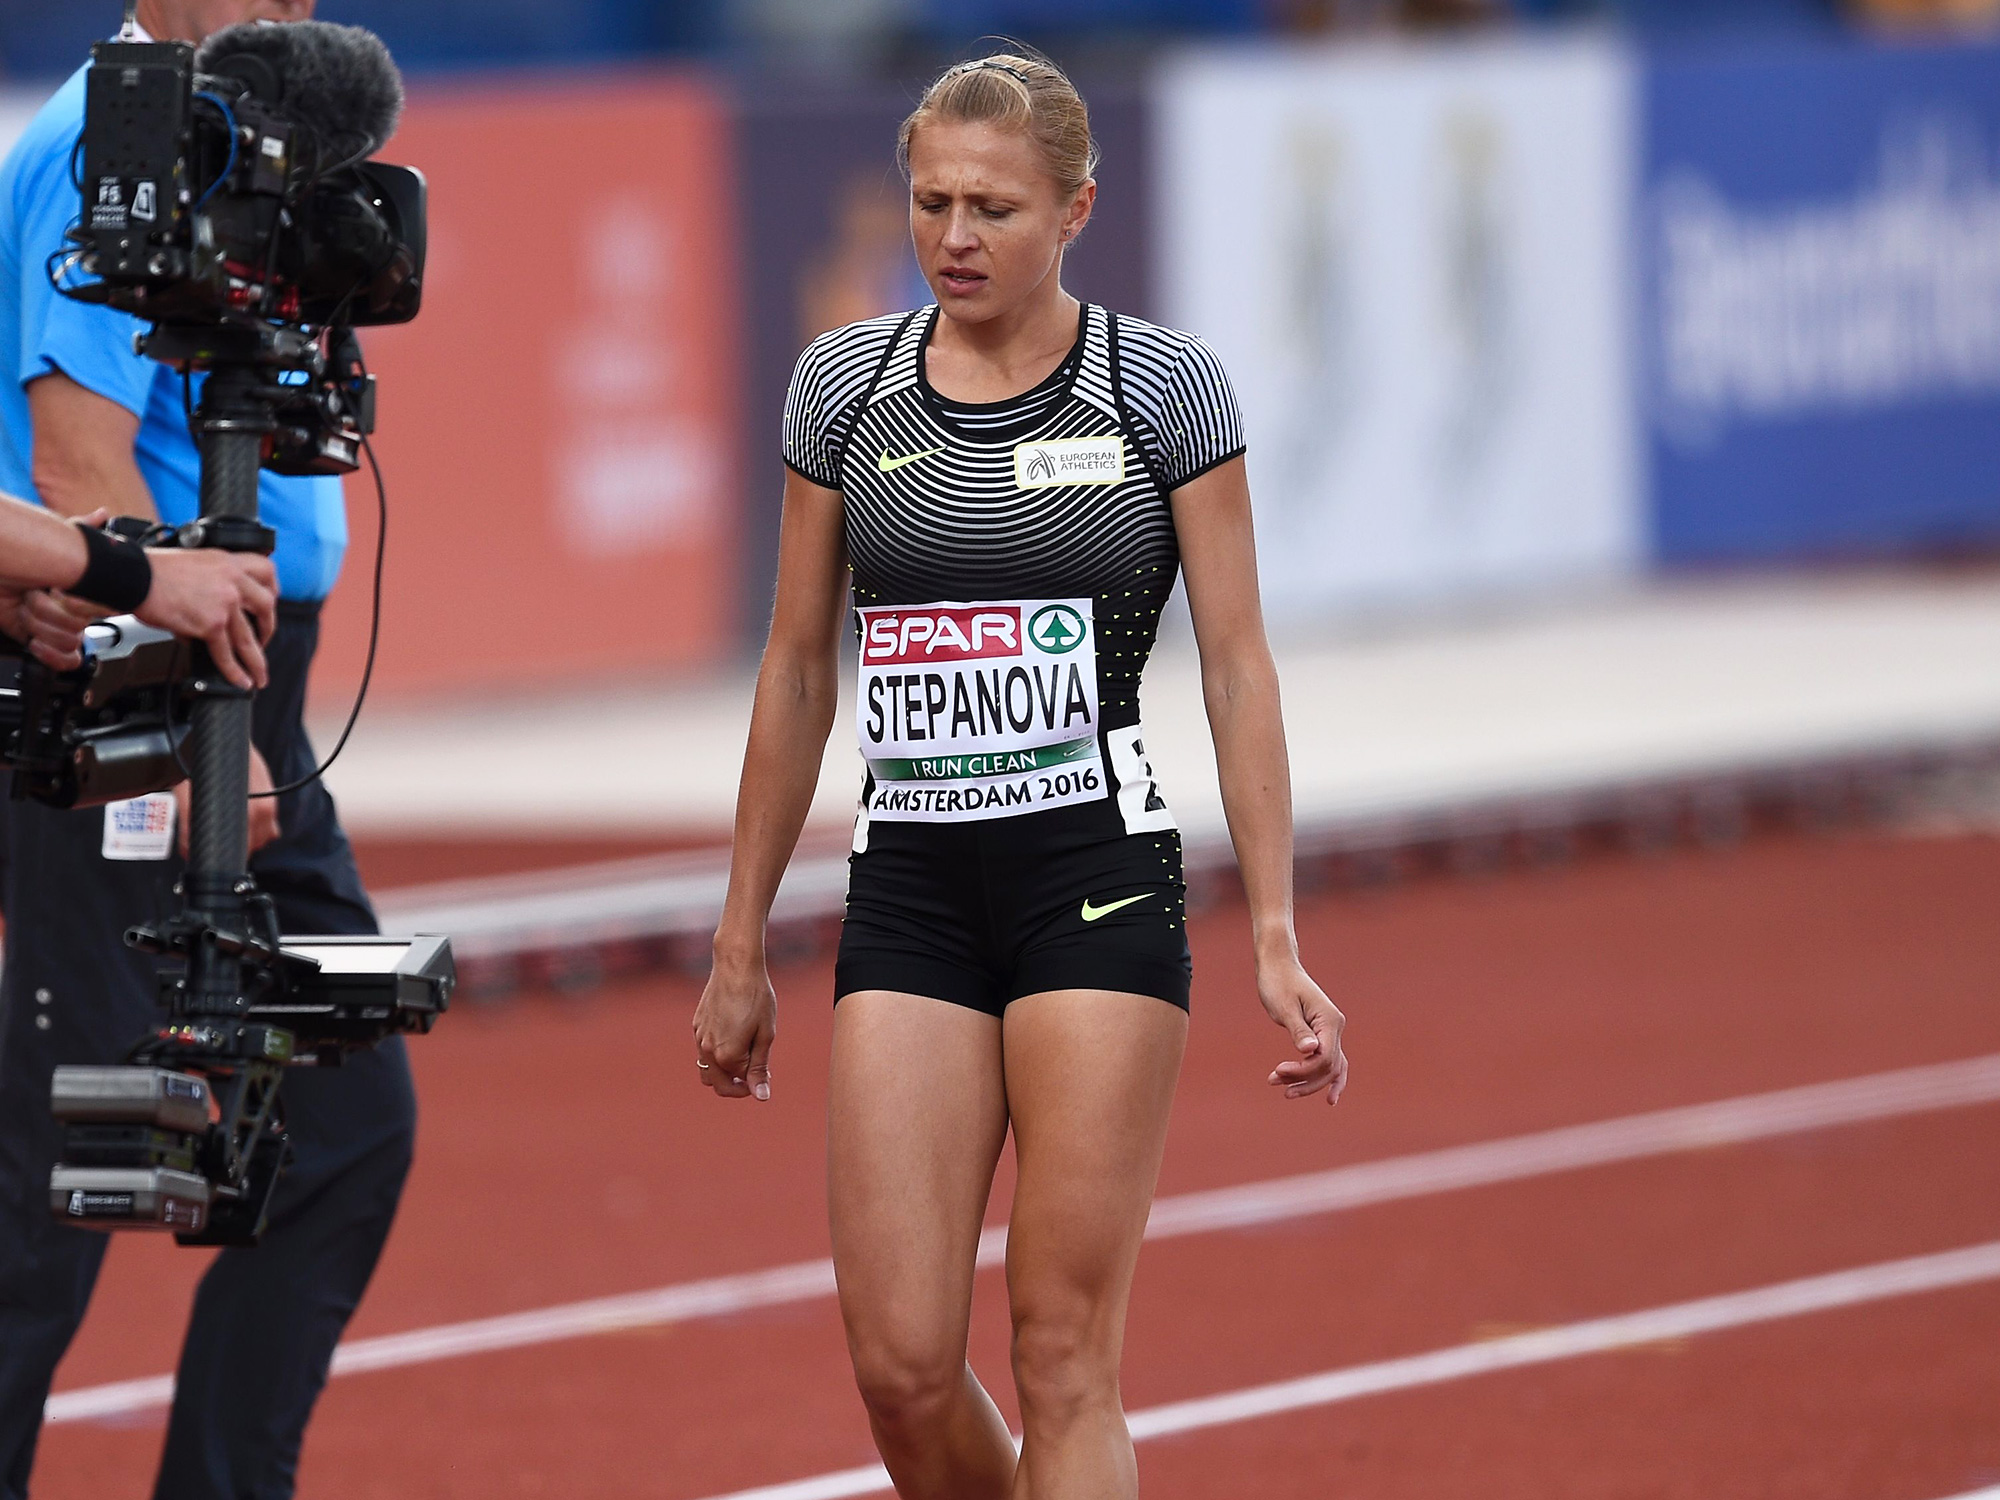 yulia-stepanova-russia-doping-ban-inline.jpg